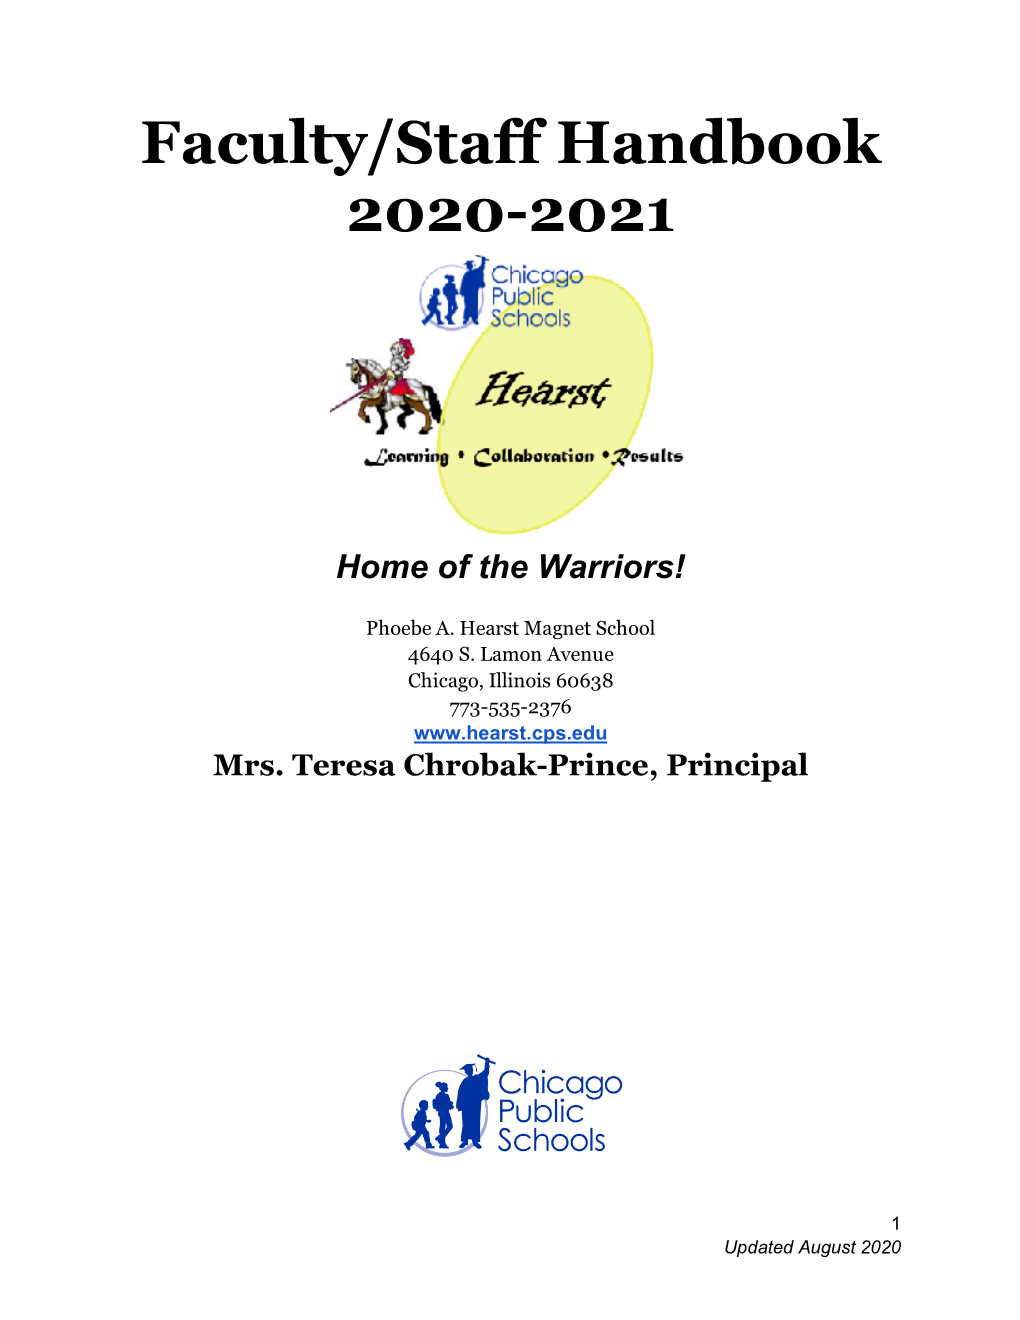 Faculty/Staff Handbook 2020-2021